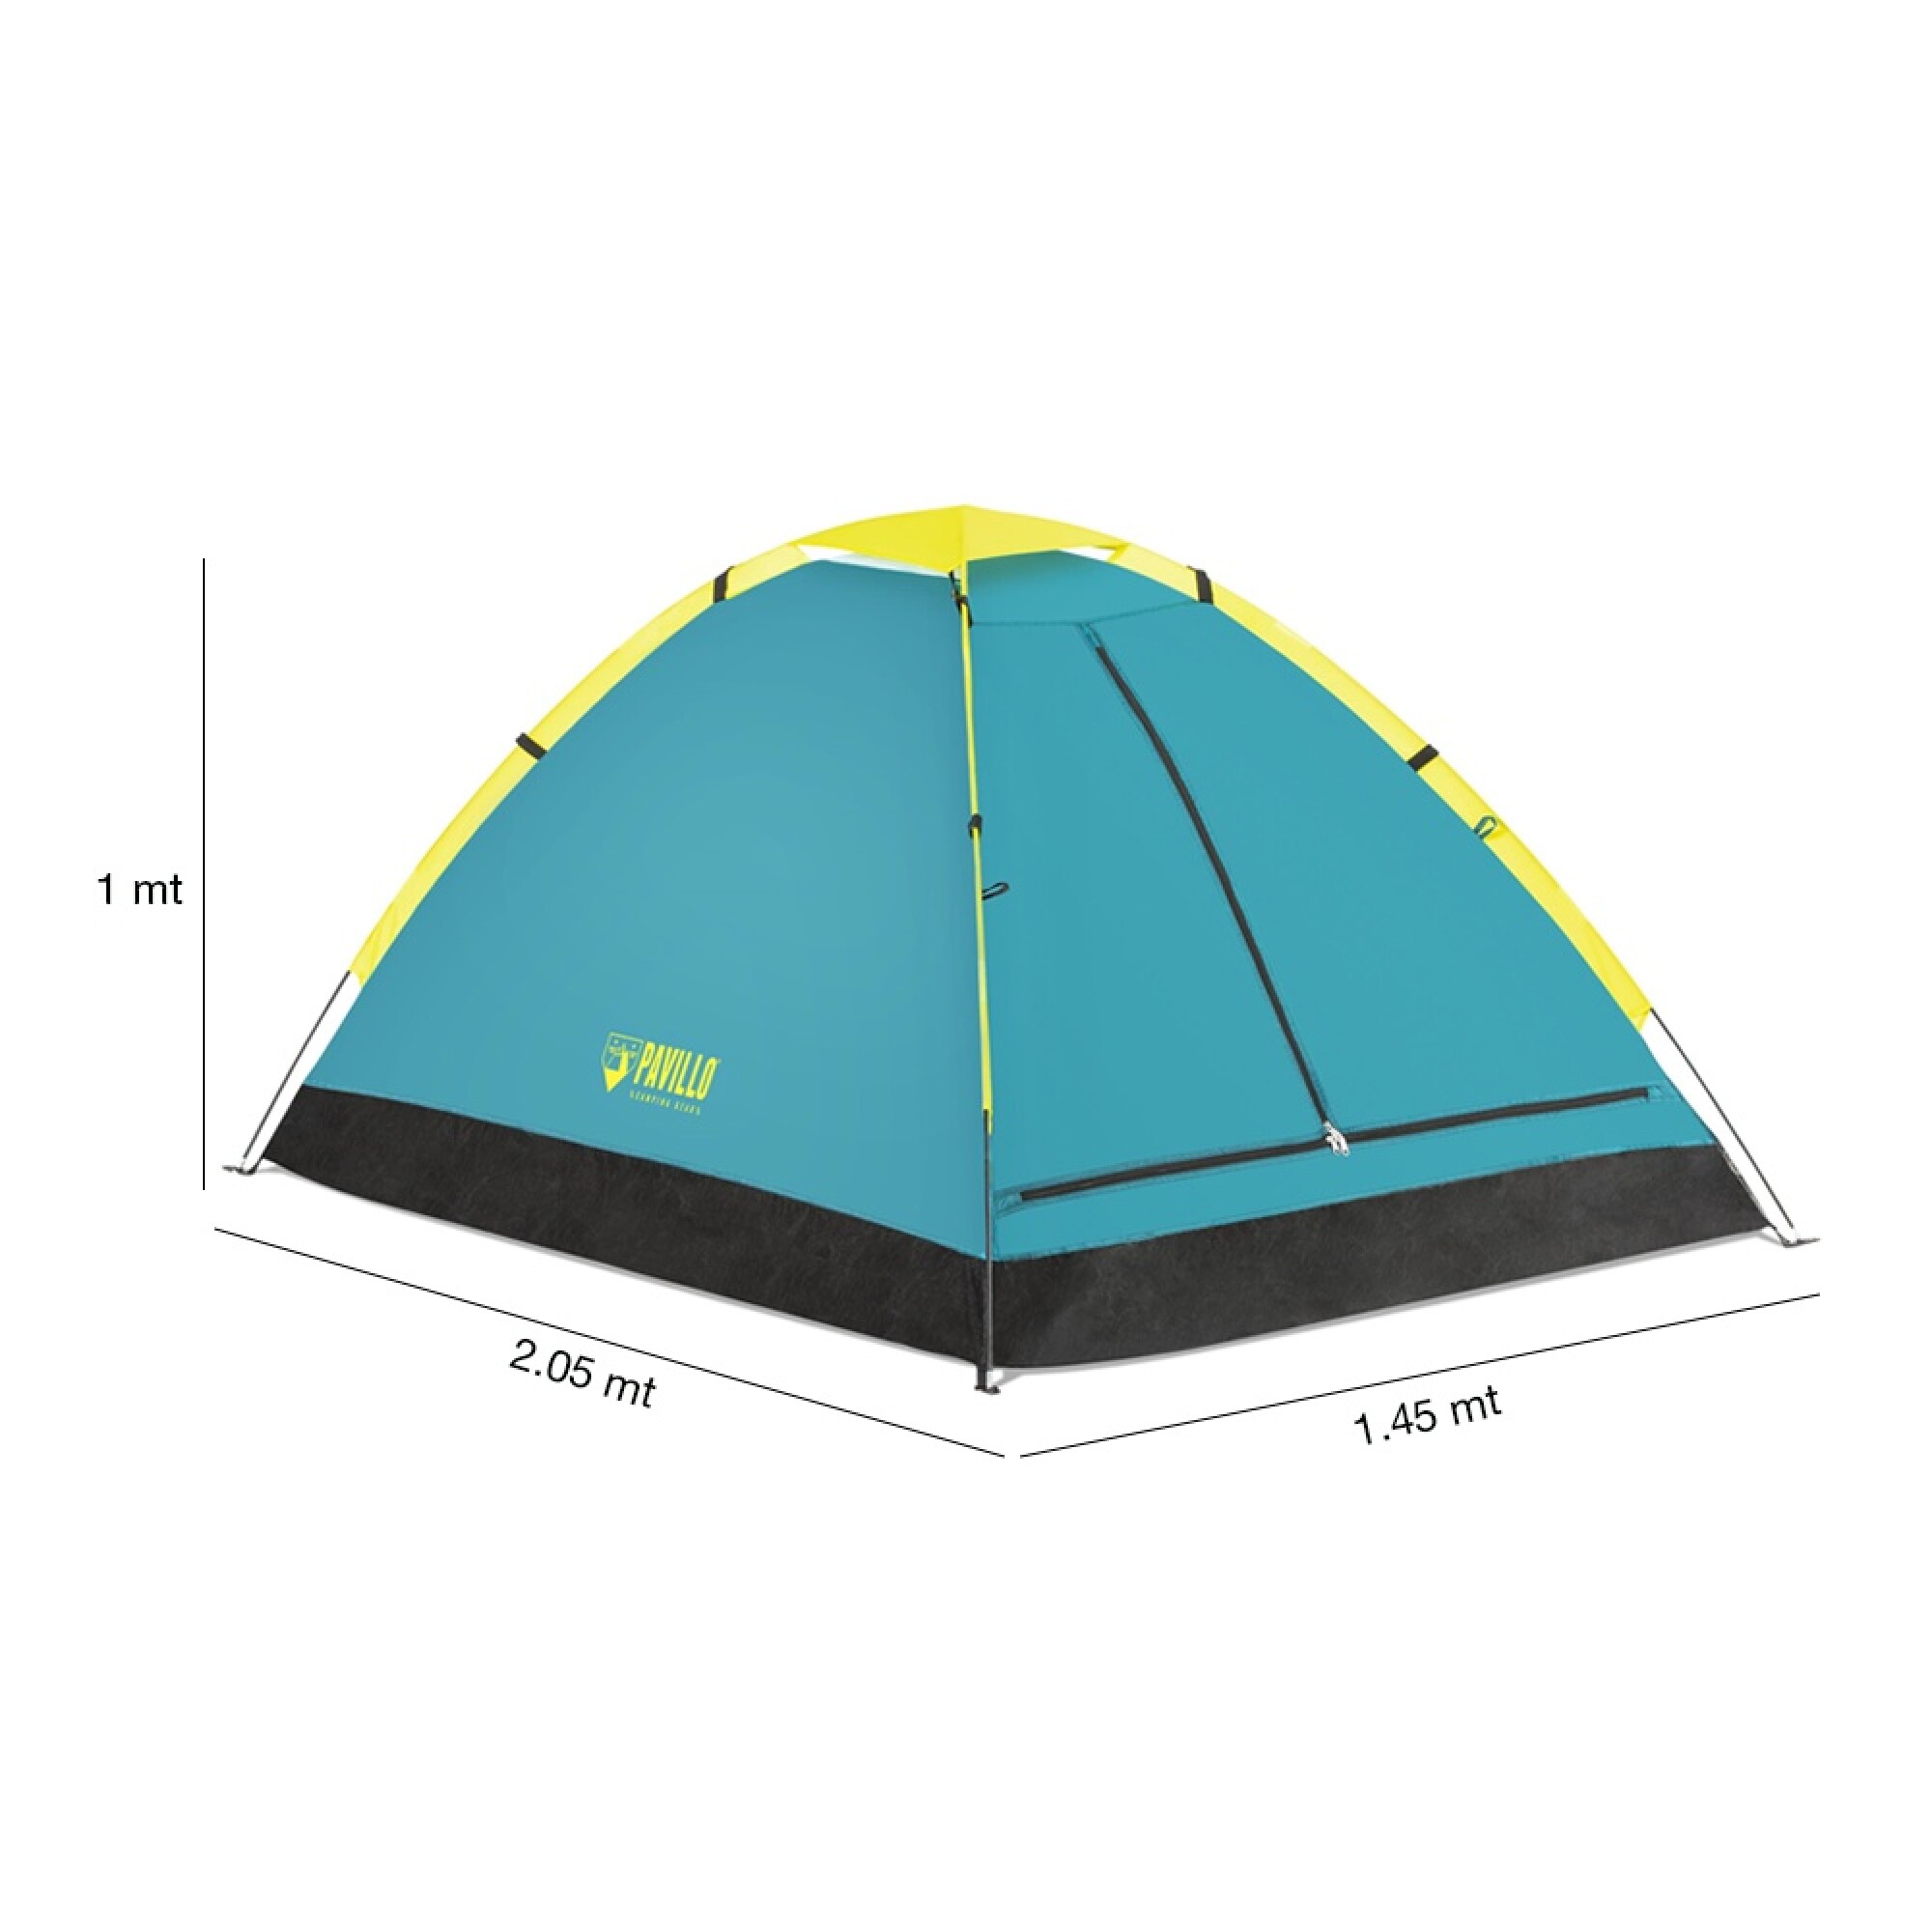 Carpa Camping Baño Bestway Super Comoda Calidad 1x1x1.9mts